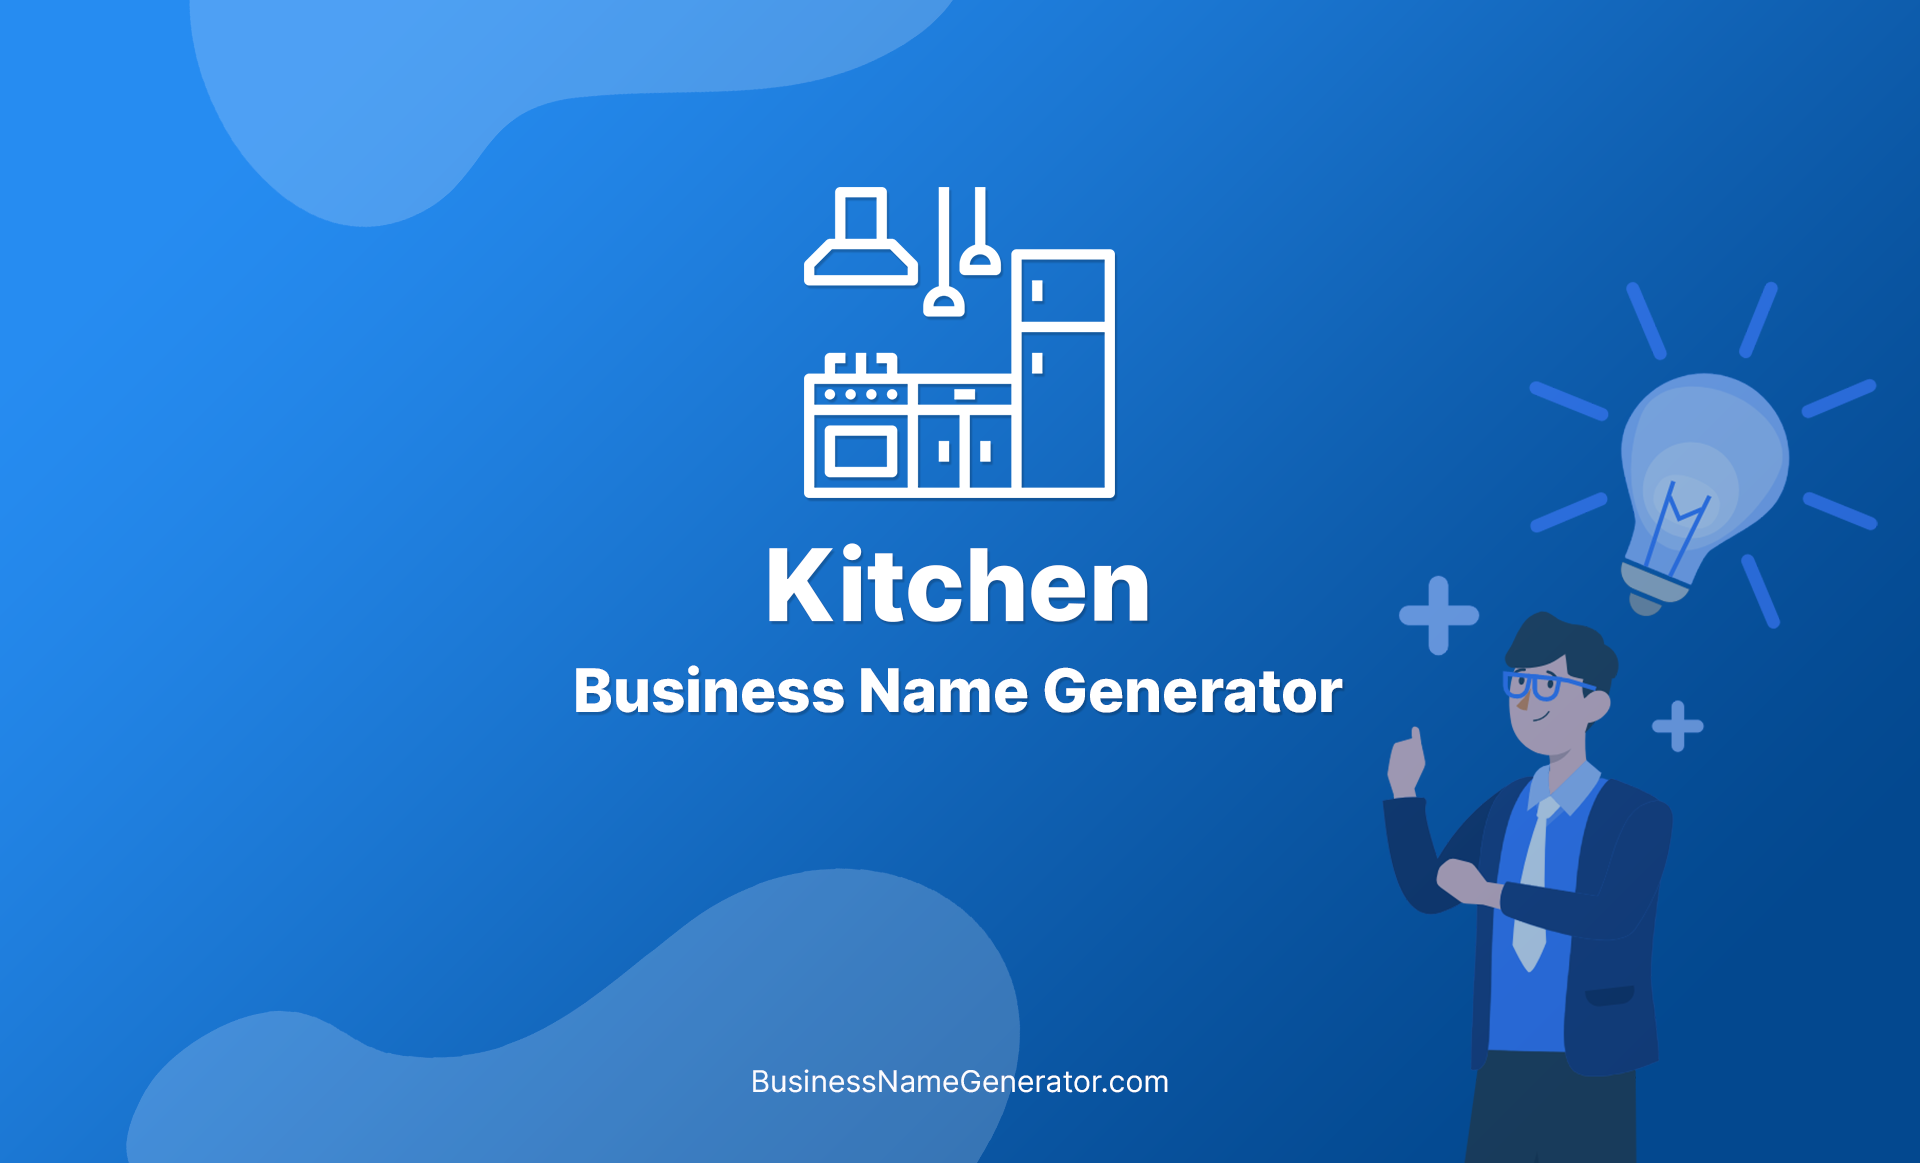 Kitchen Business Name Generator